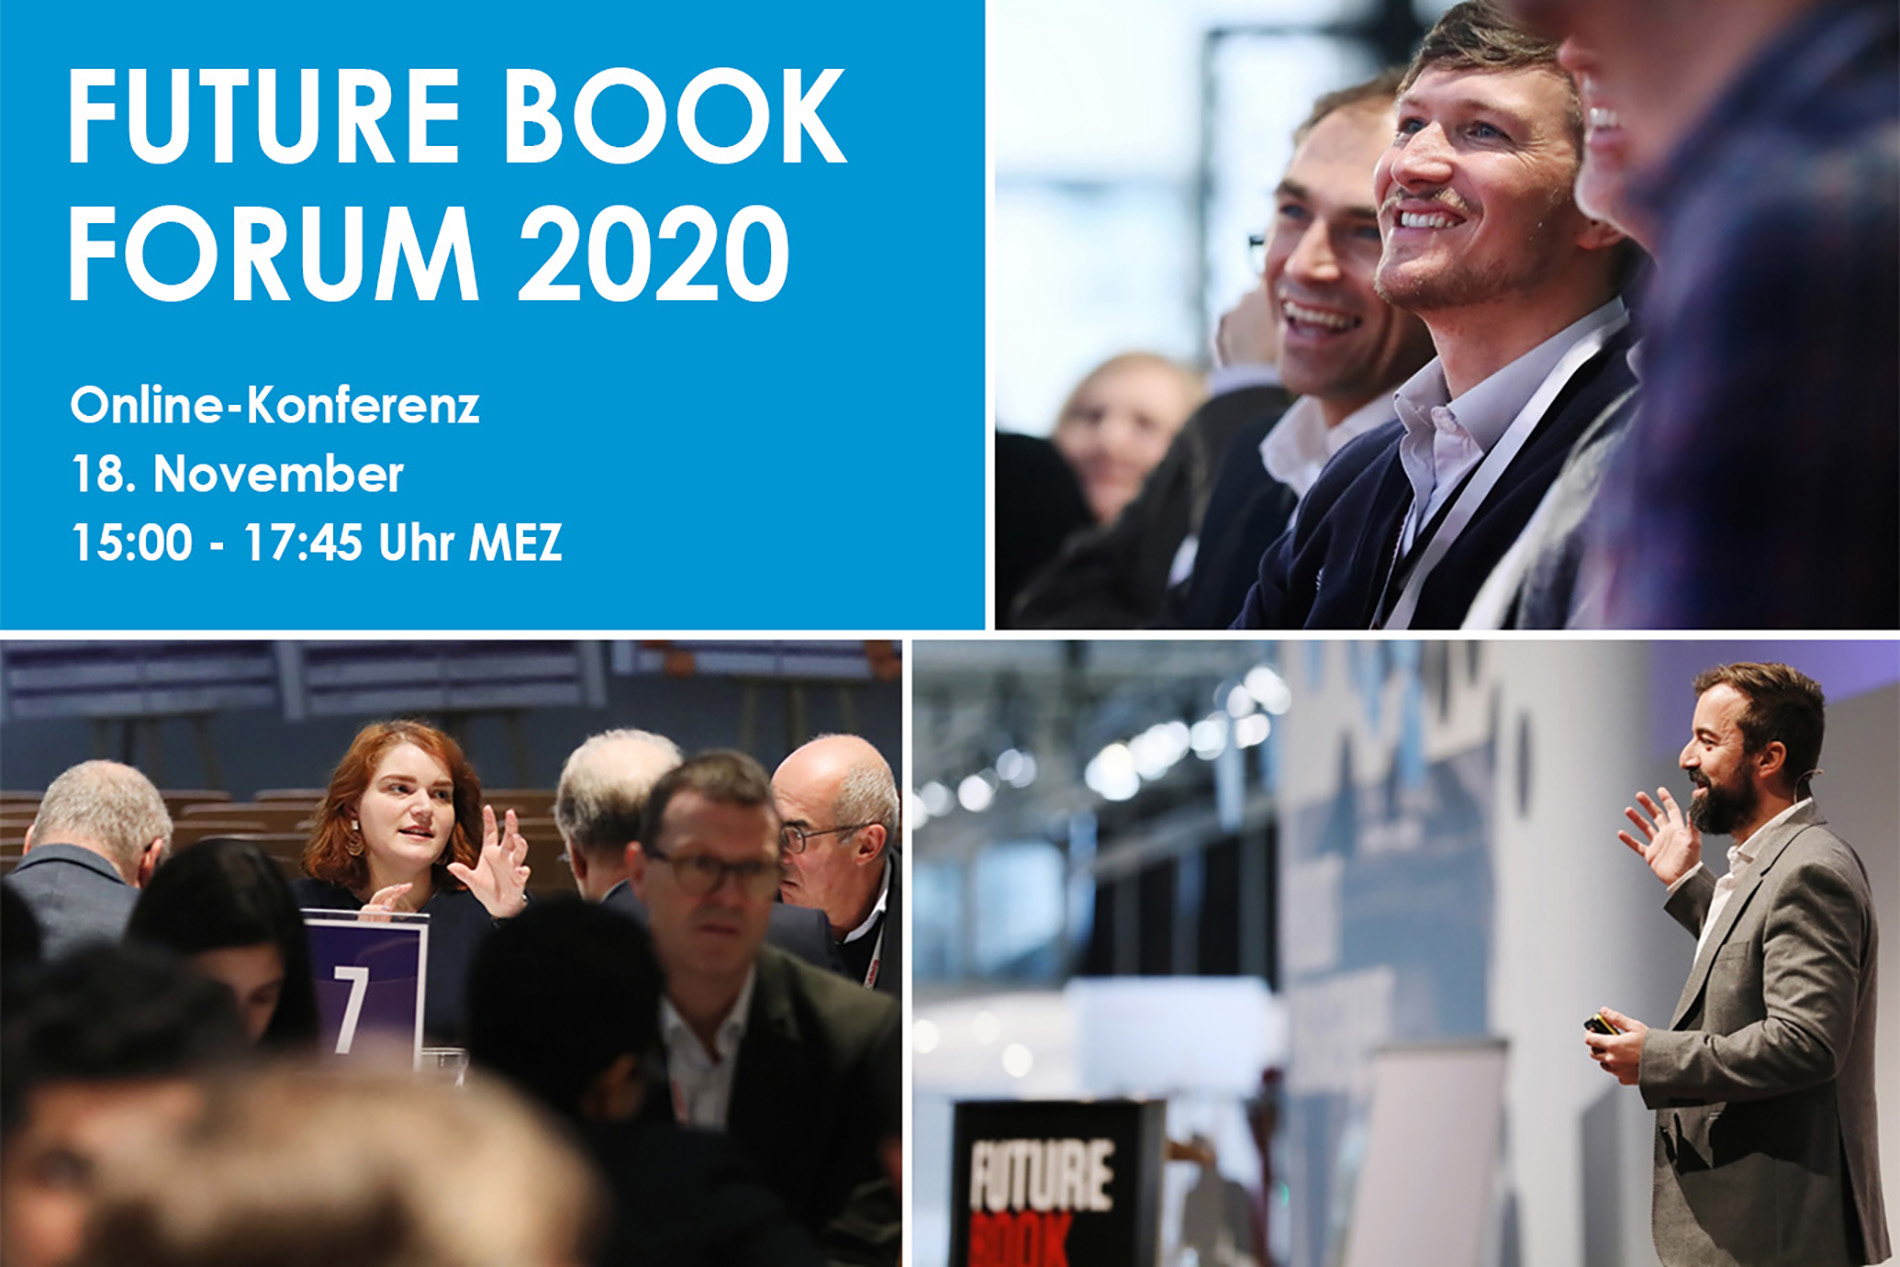 Future Book Forum 2020 - 18. November 2020